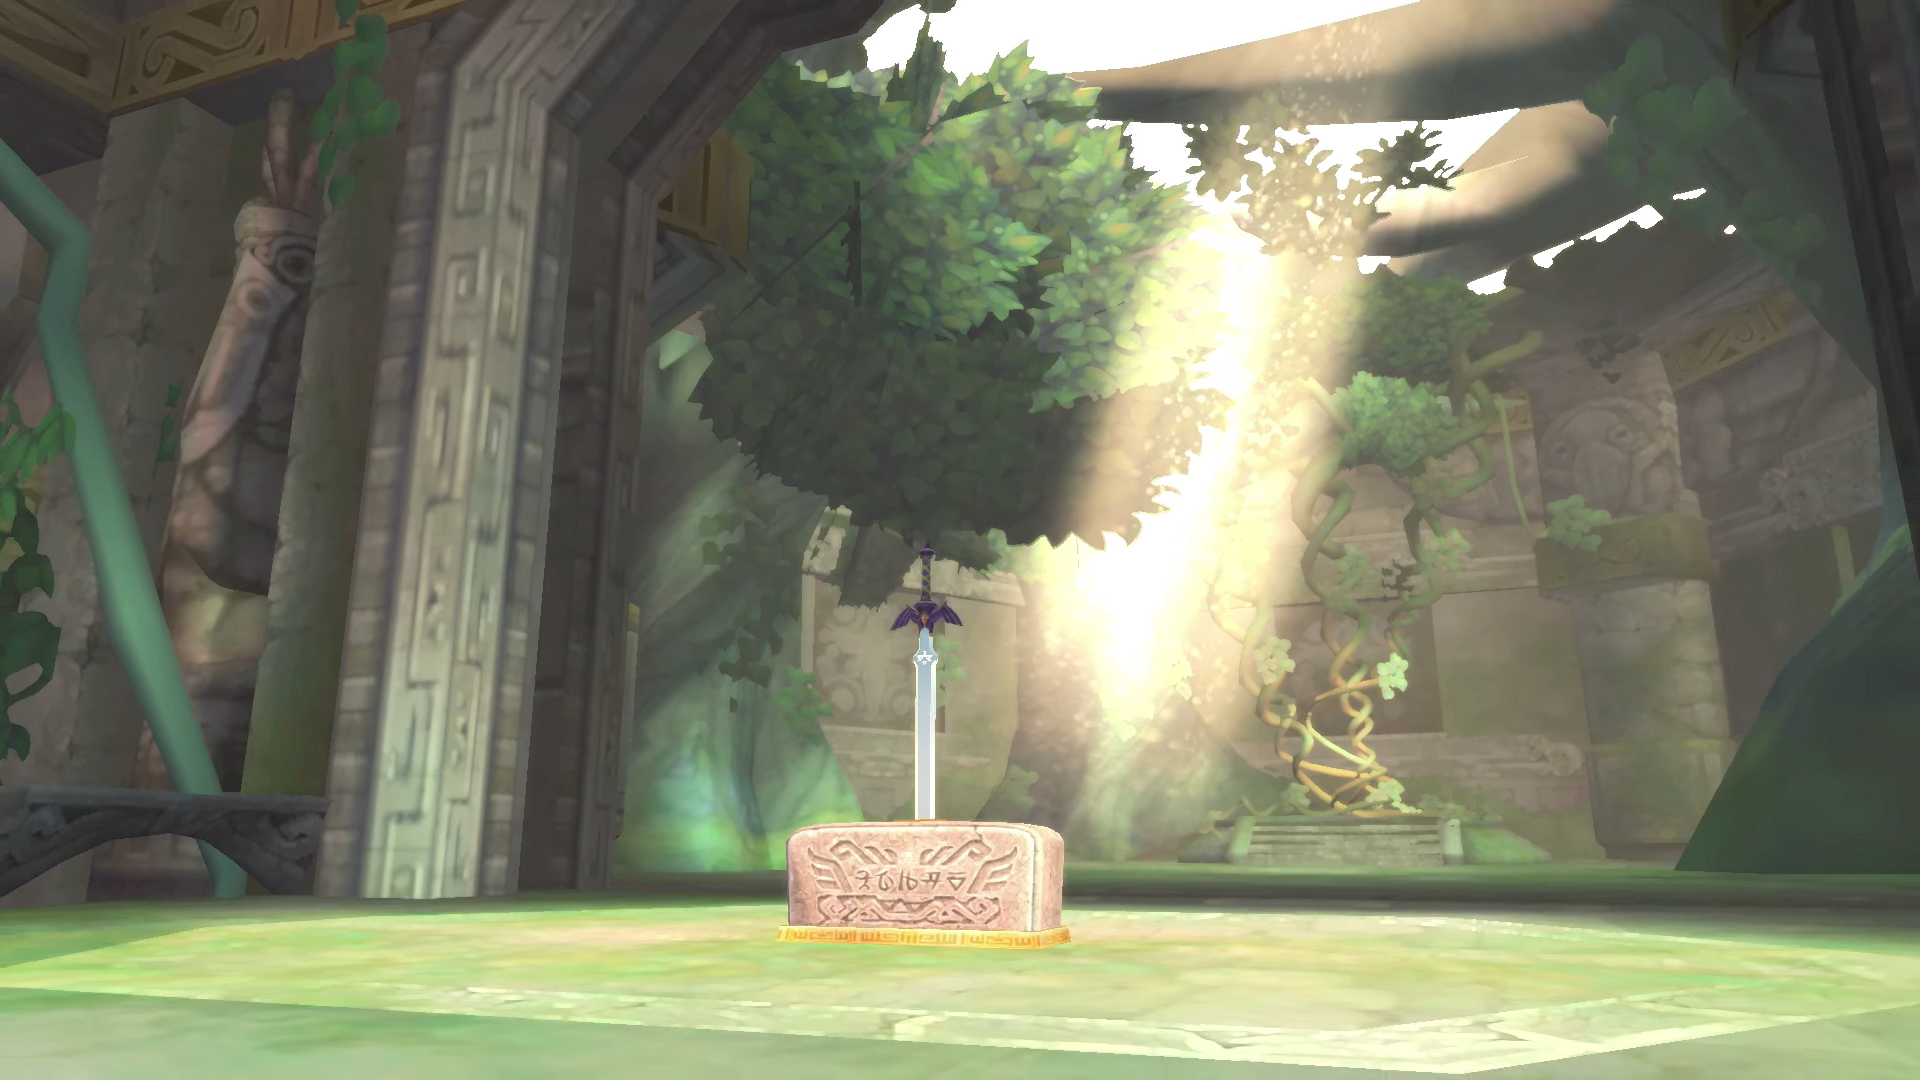 The Legend of Zelda: Skyward Sword HD (for Nintendo Switch) Review